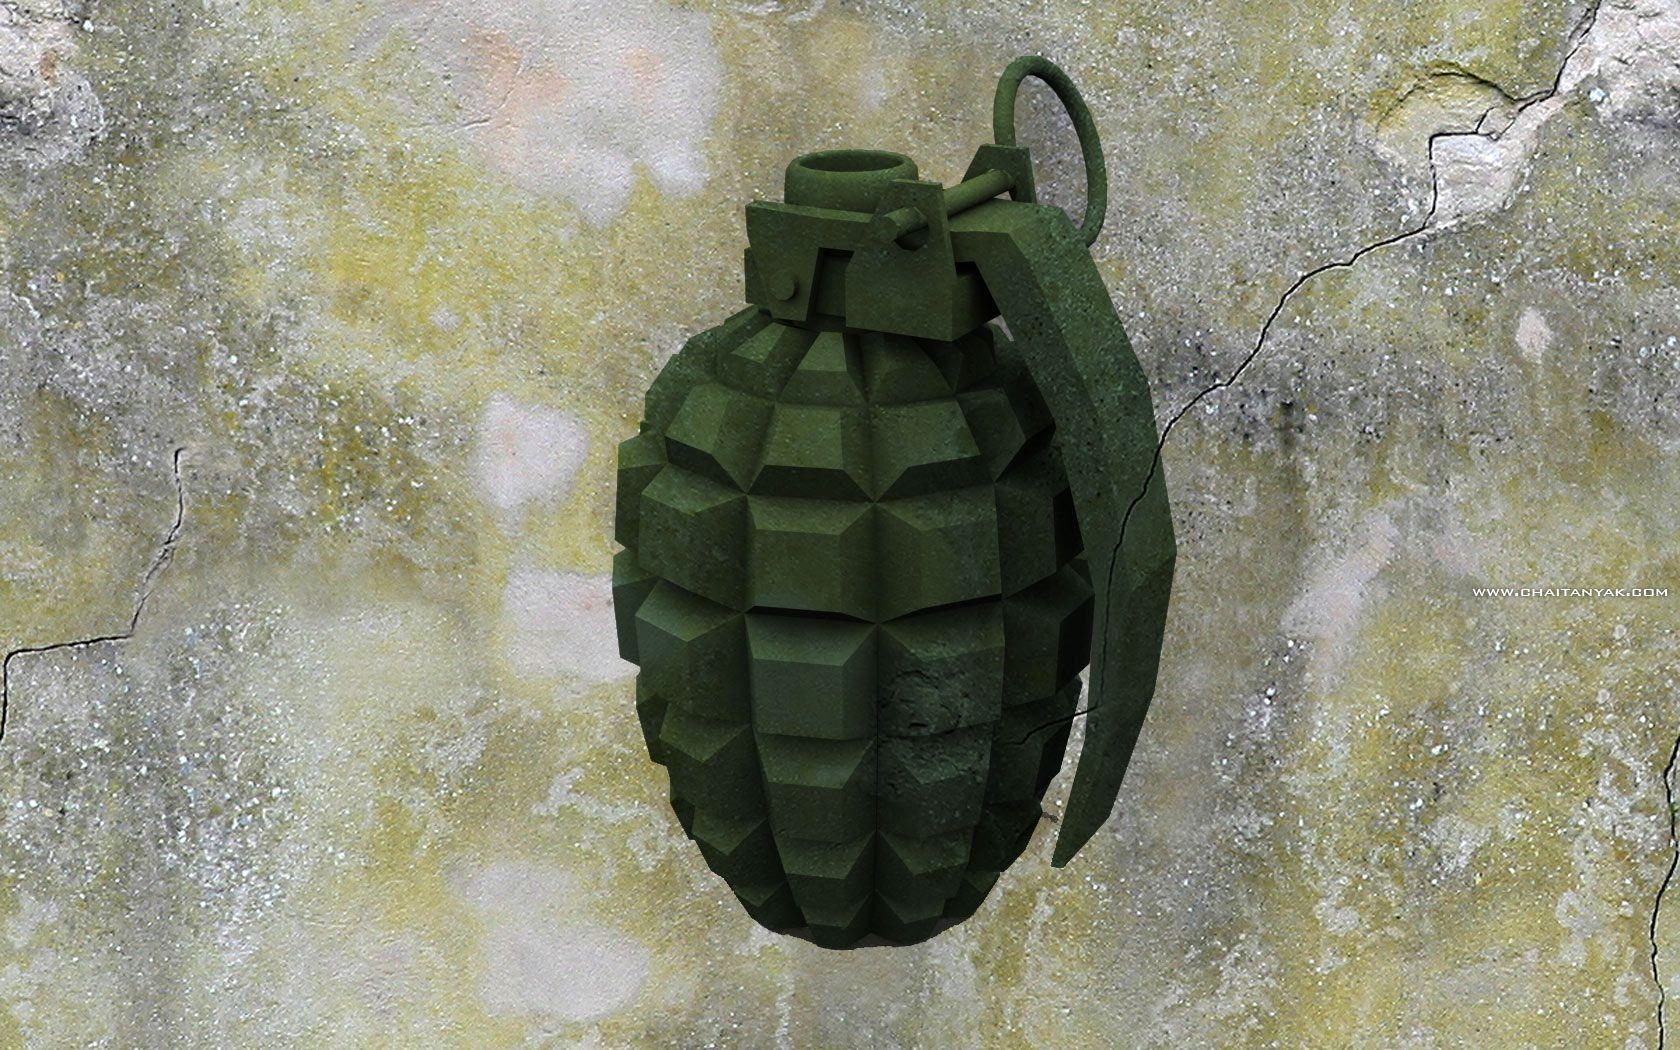 Download wallpaper: hand grenade wallpaper, download photo